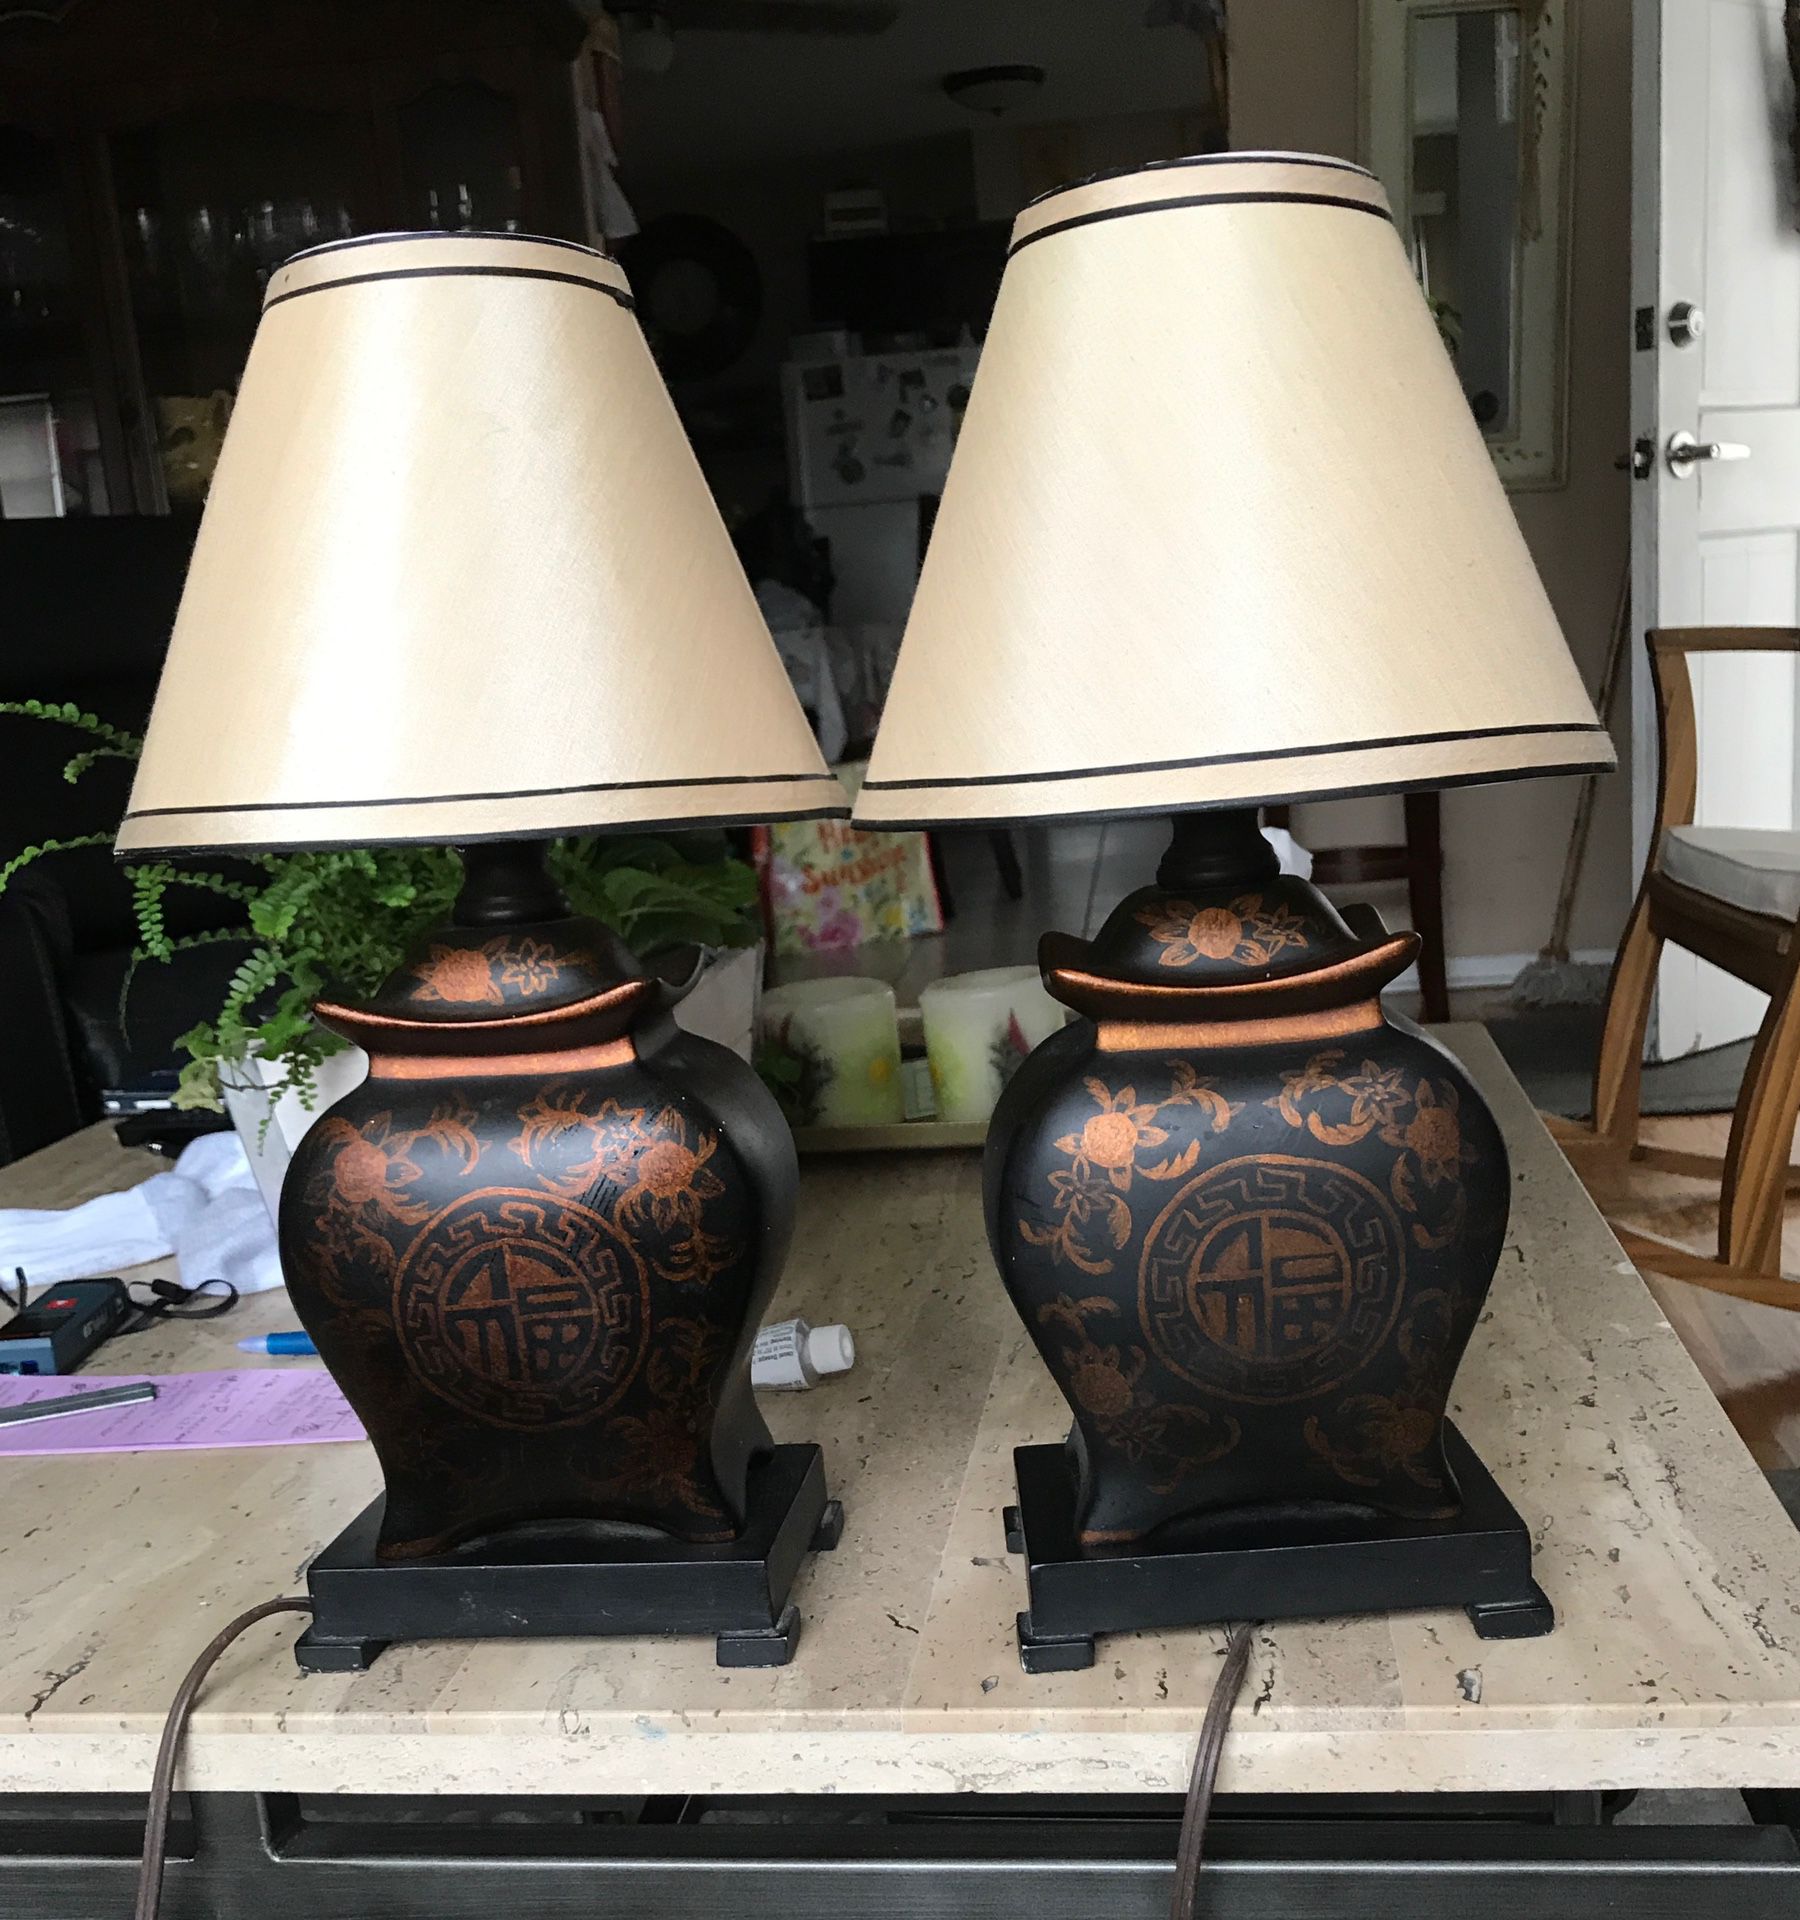 Matching bronze lamps